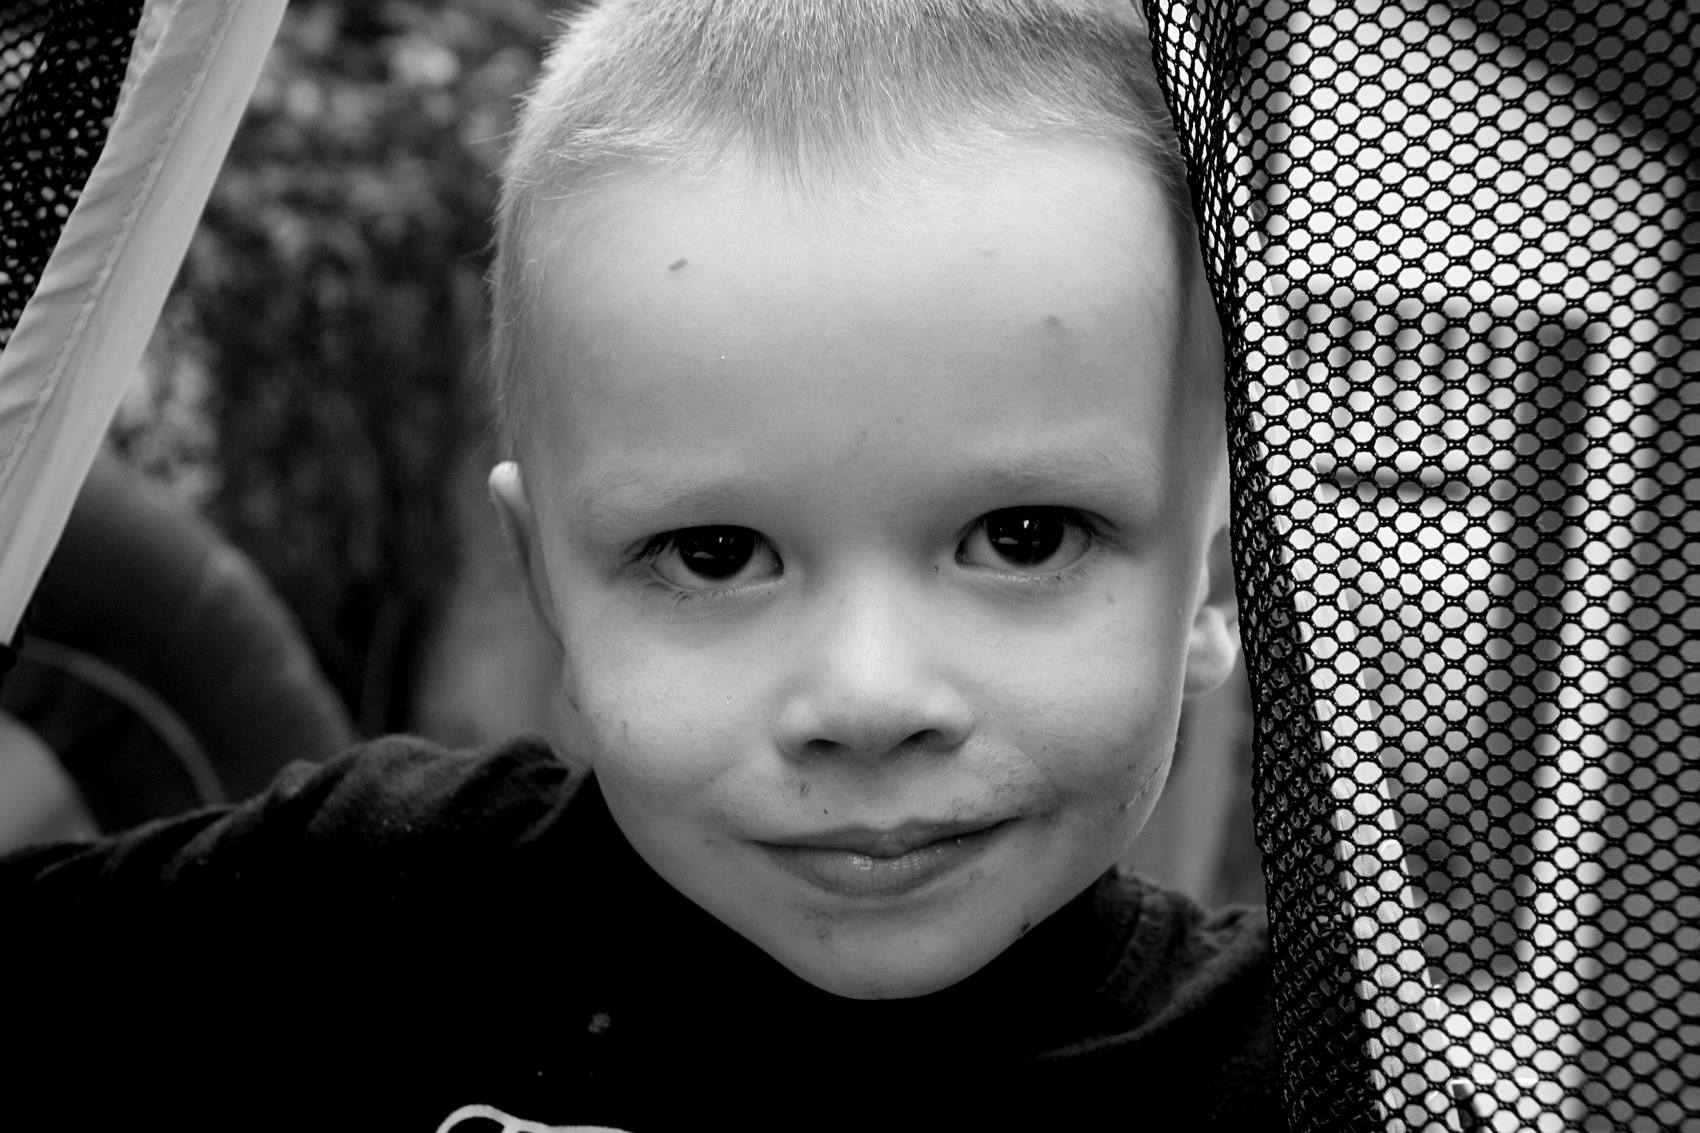 Finn black and white portrait